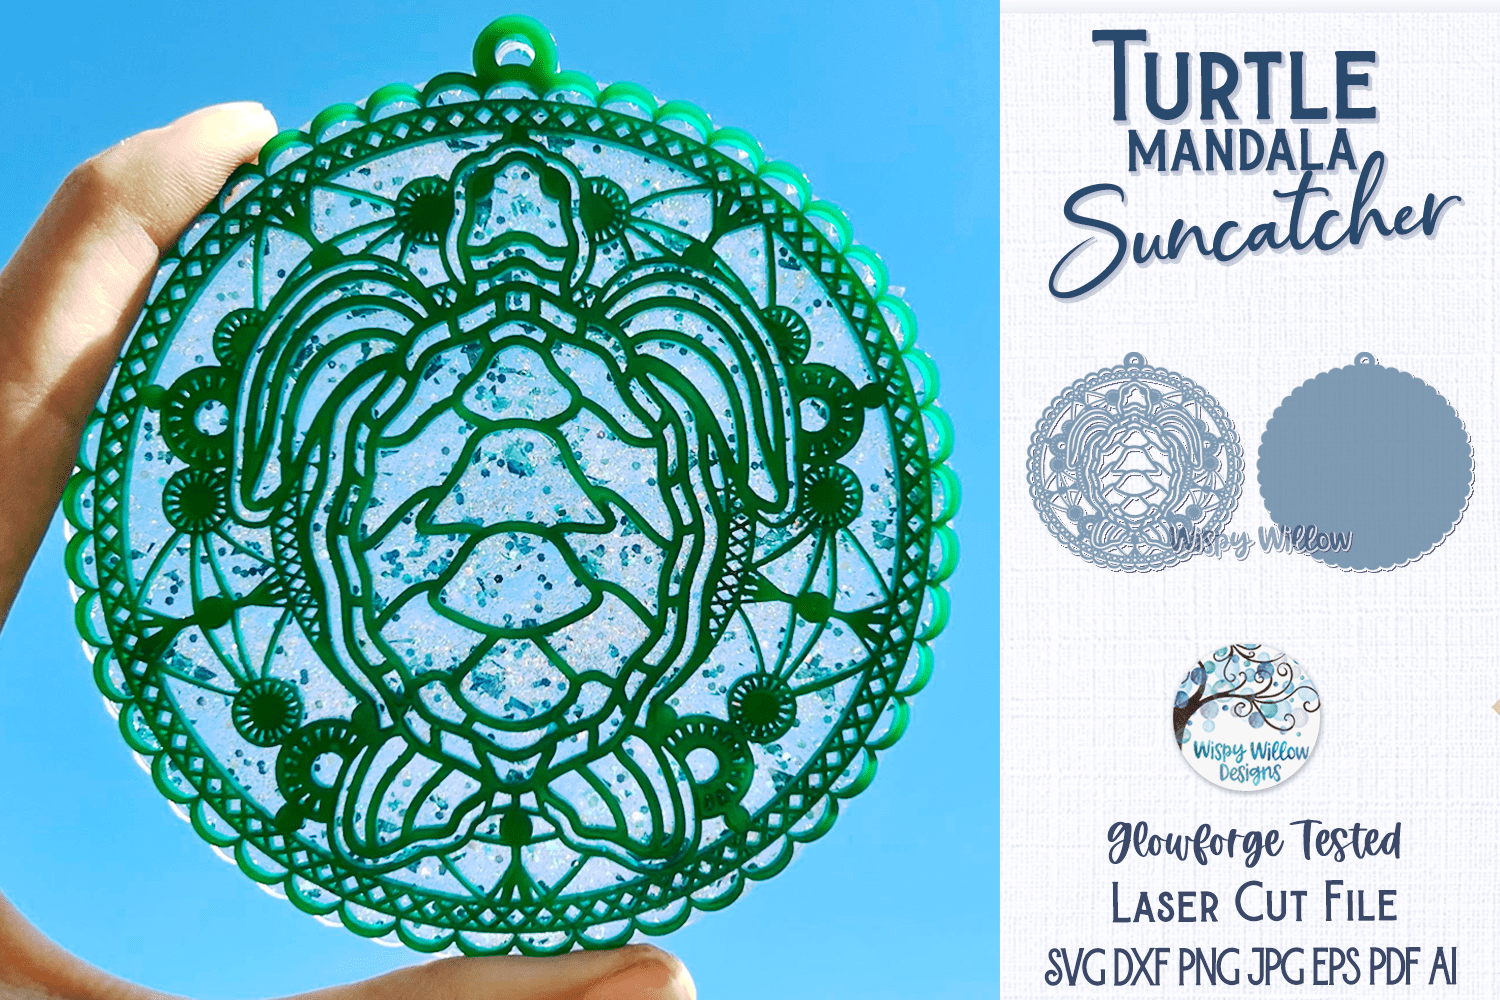 Turtle Mandala Suncatcher for Laser or Glowforge Wispy Willow Designs Company